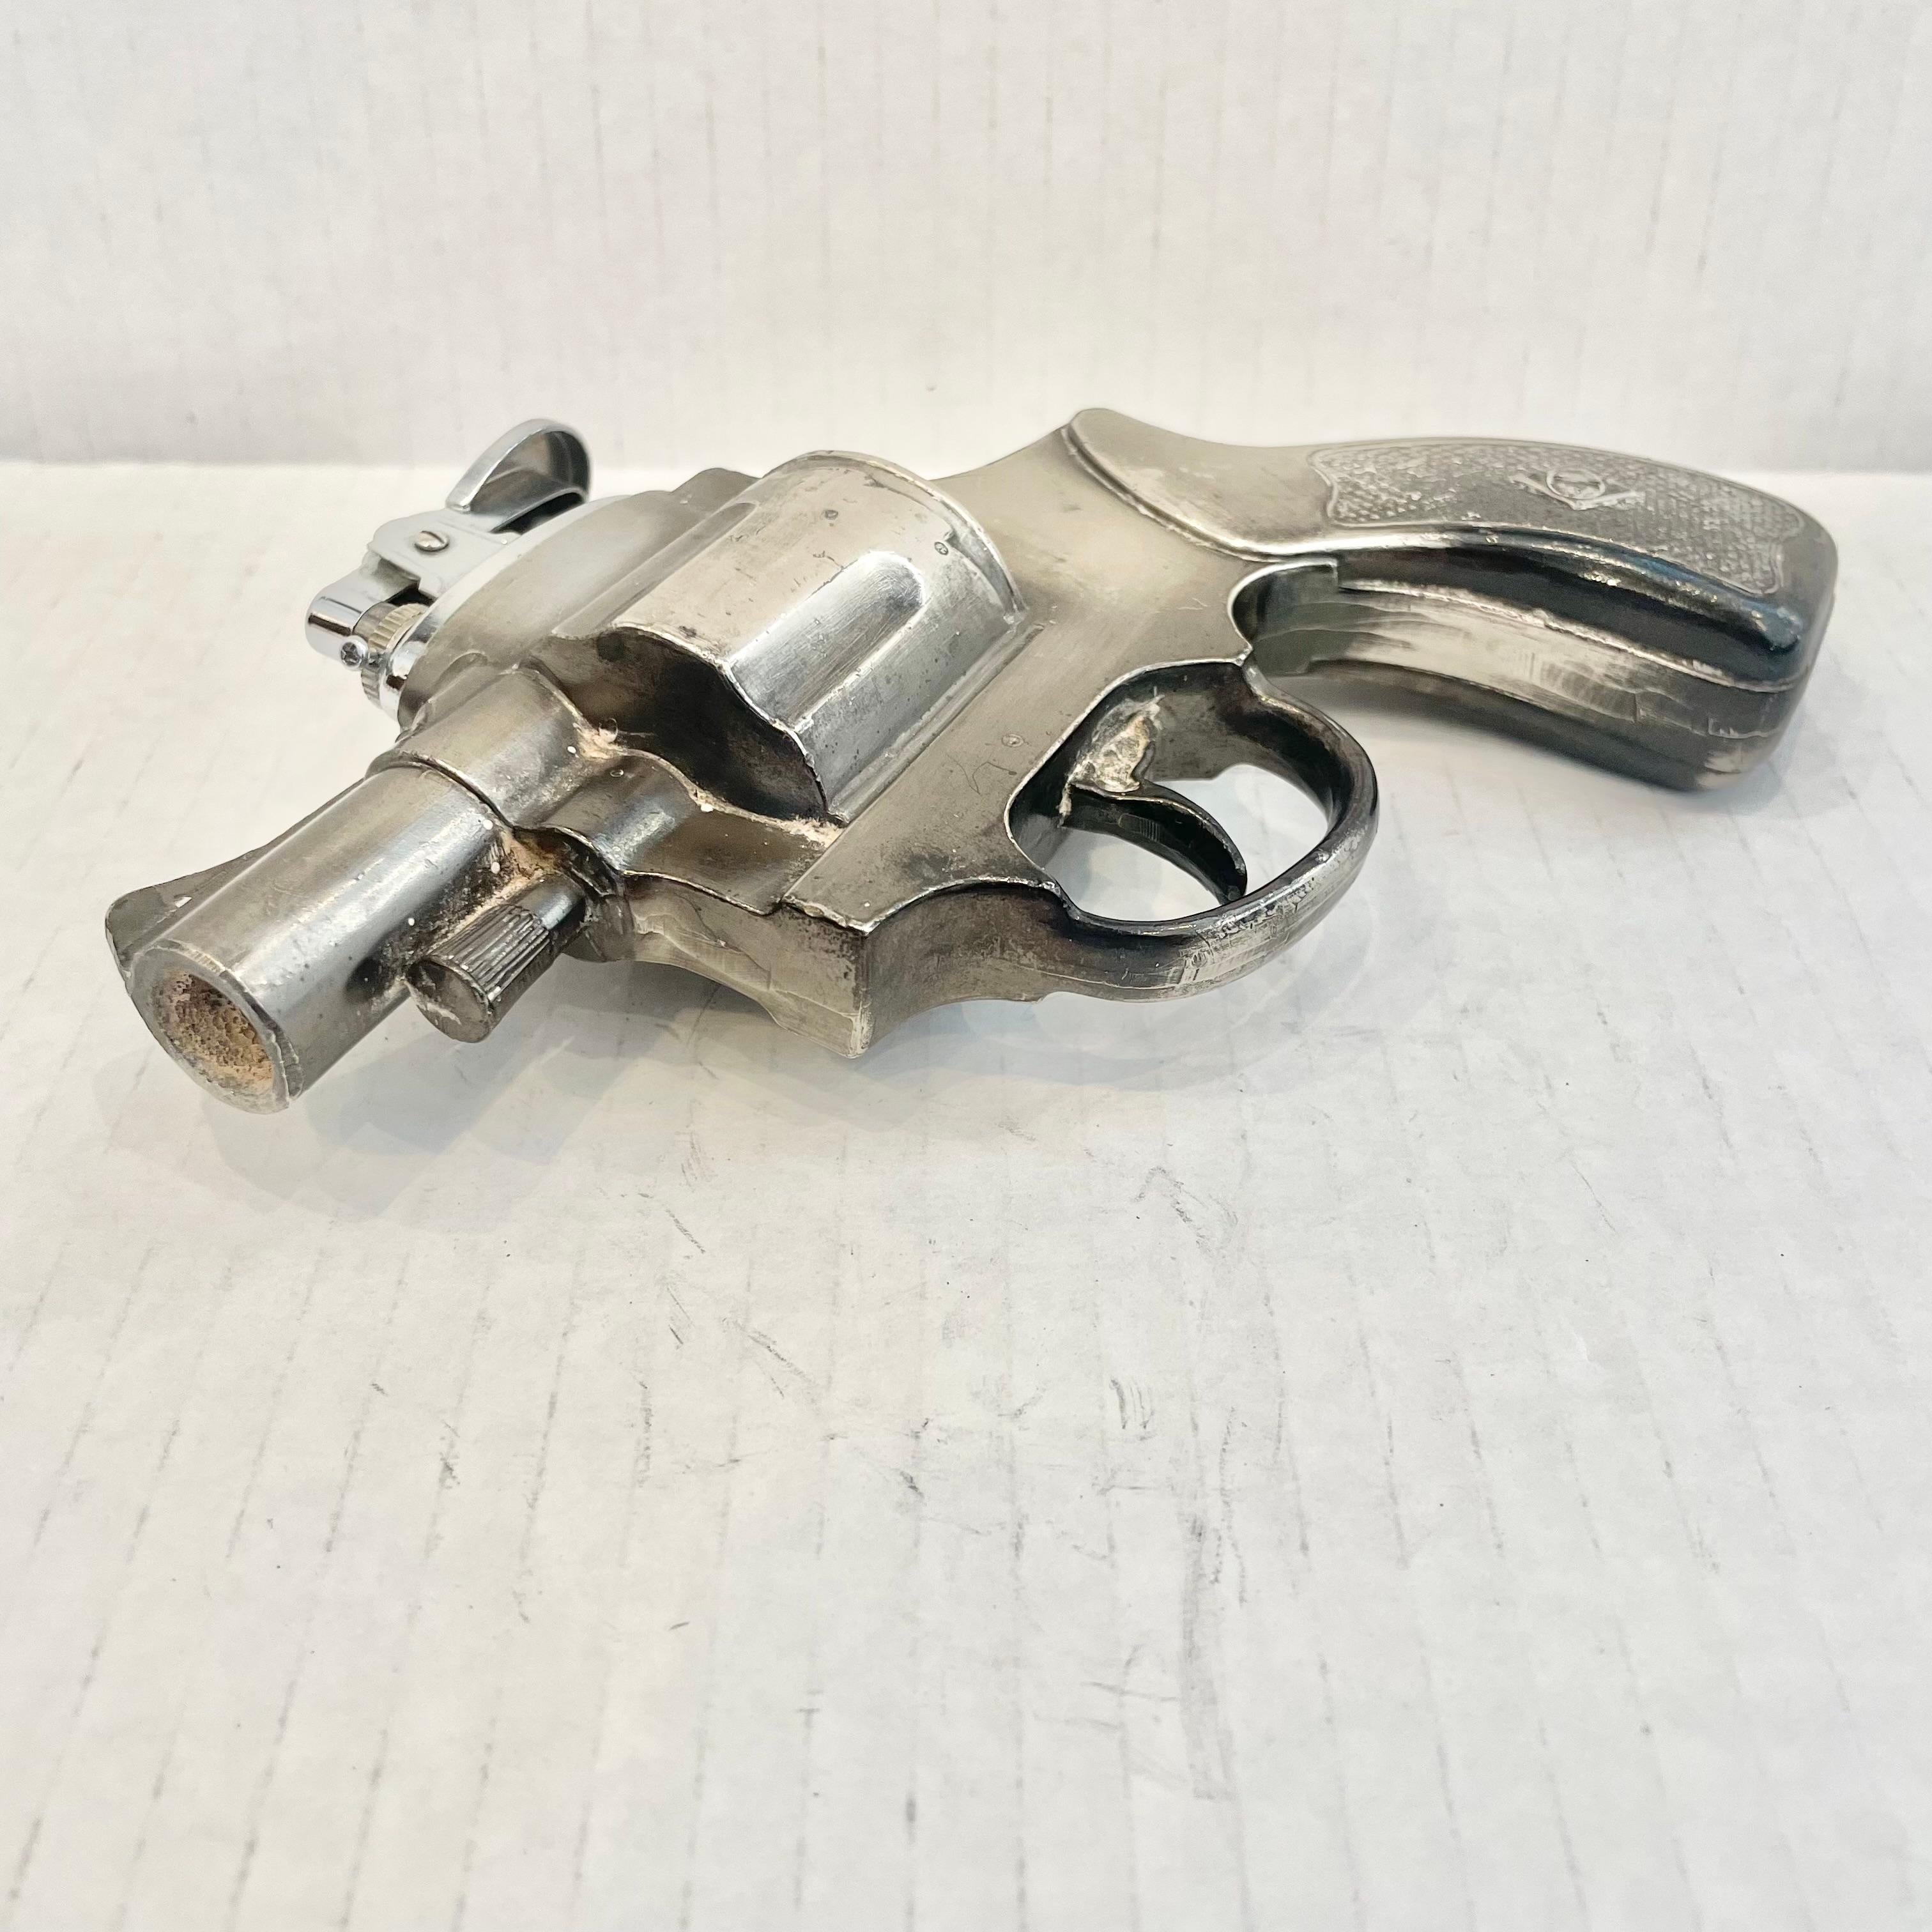 1980 revolver